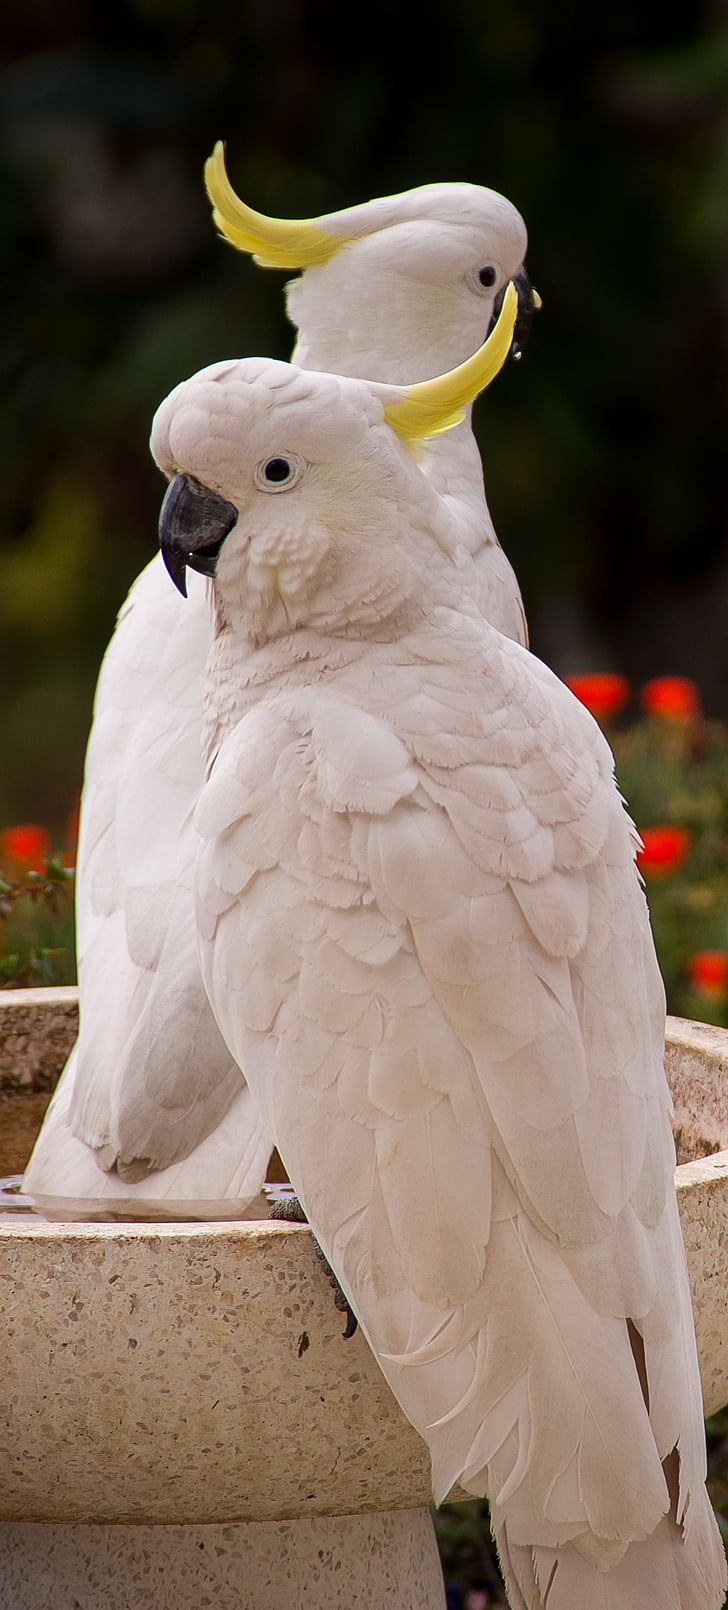 siarki crested Kakadu, papuga, Cacatua galerita, ptak, pióro, biały, żółty